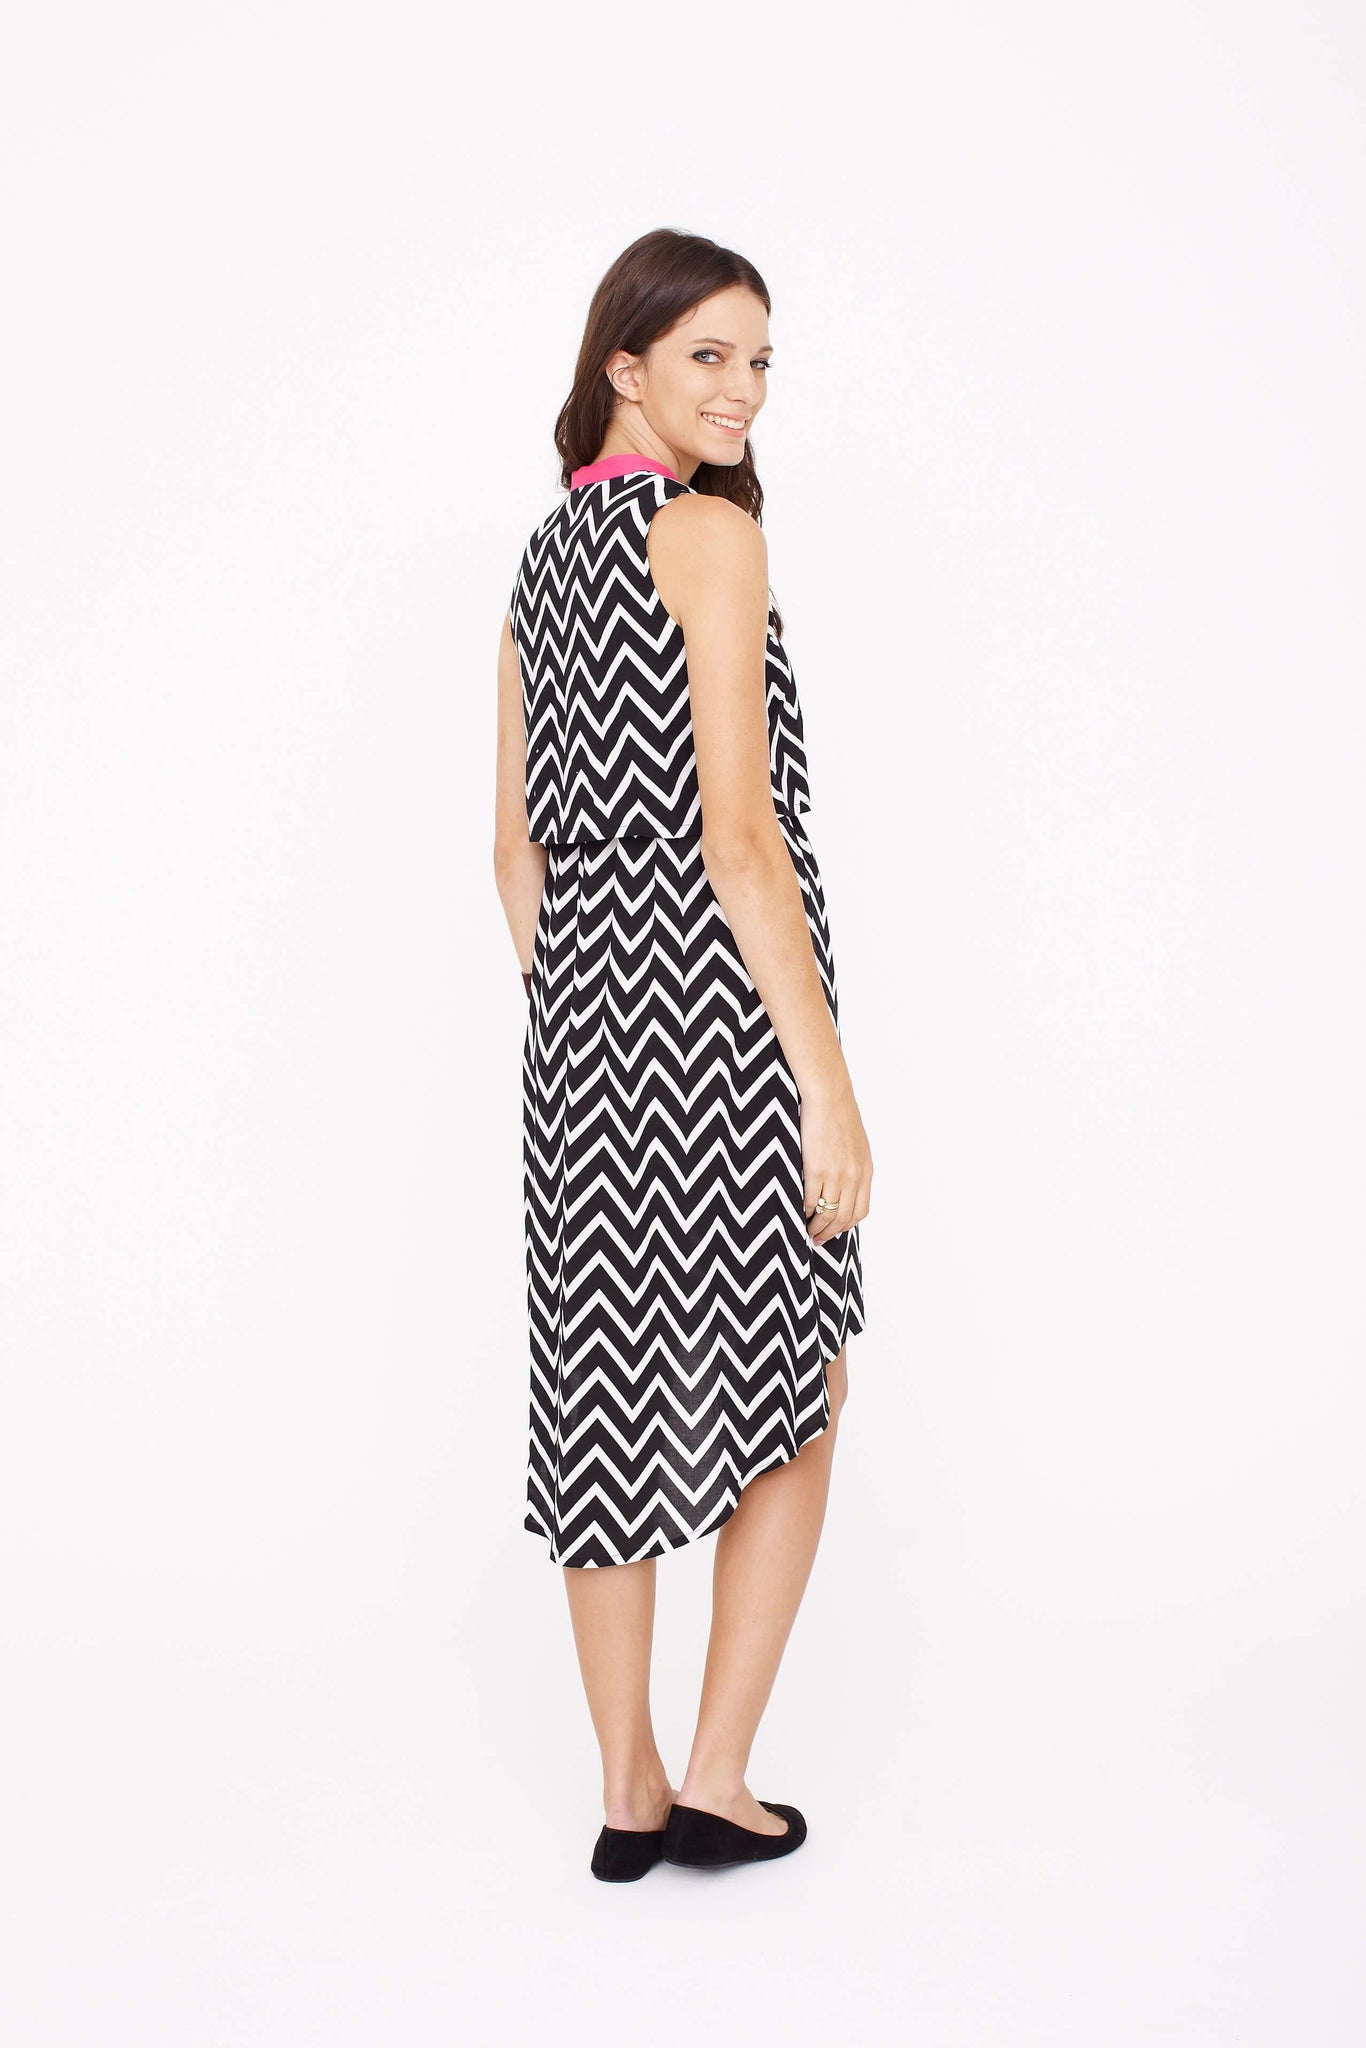 Fashionably Pregnant Designer Dote Studio Simone Chevron Maternity Dress Black White Pink